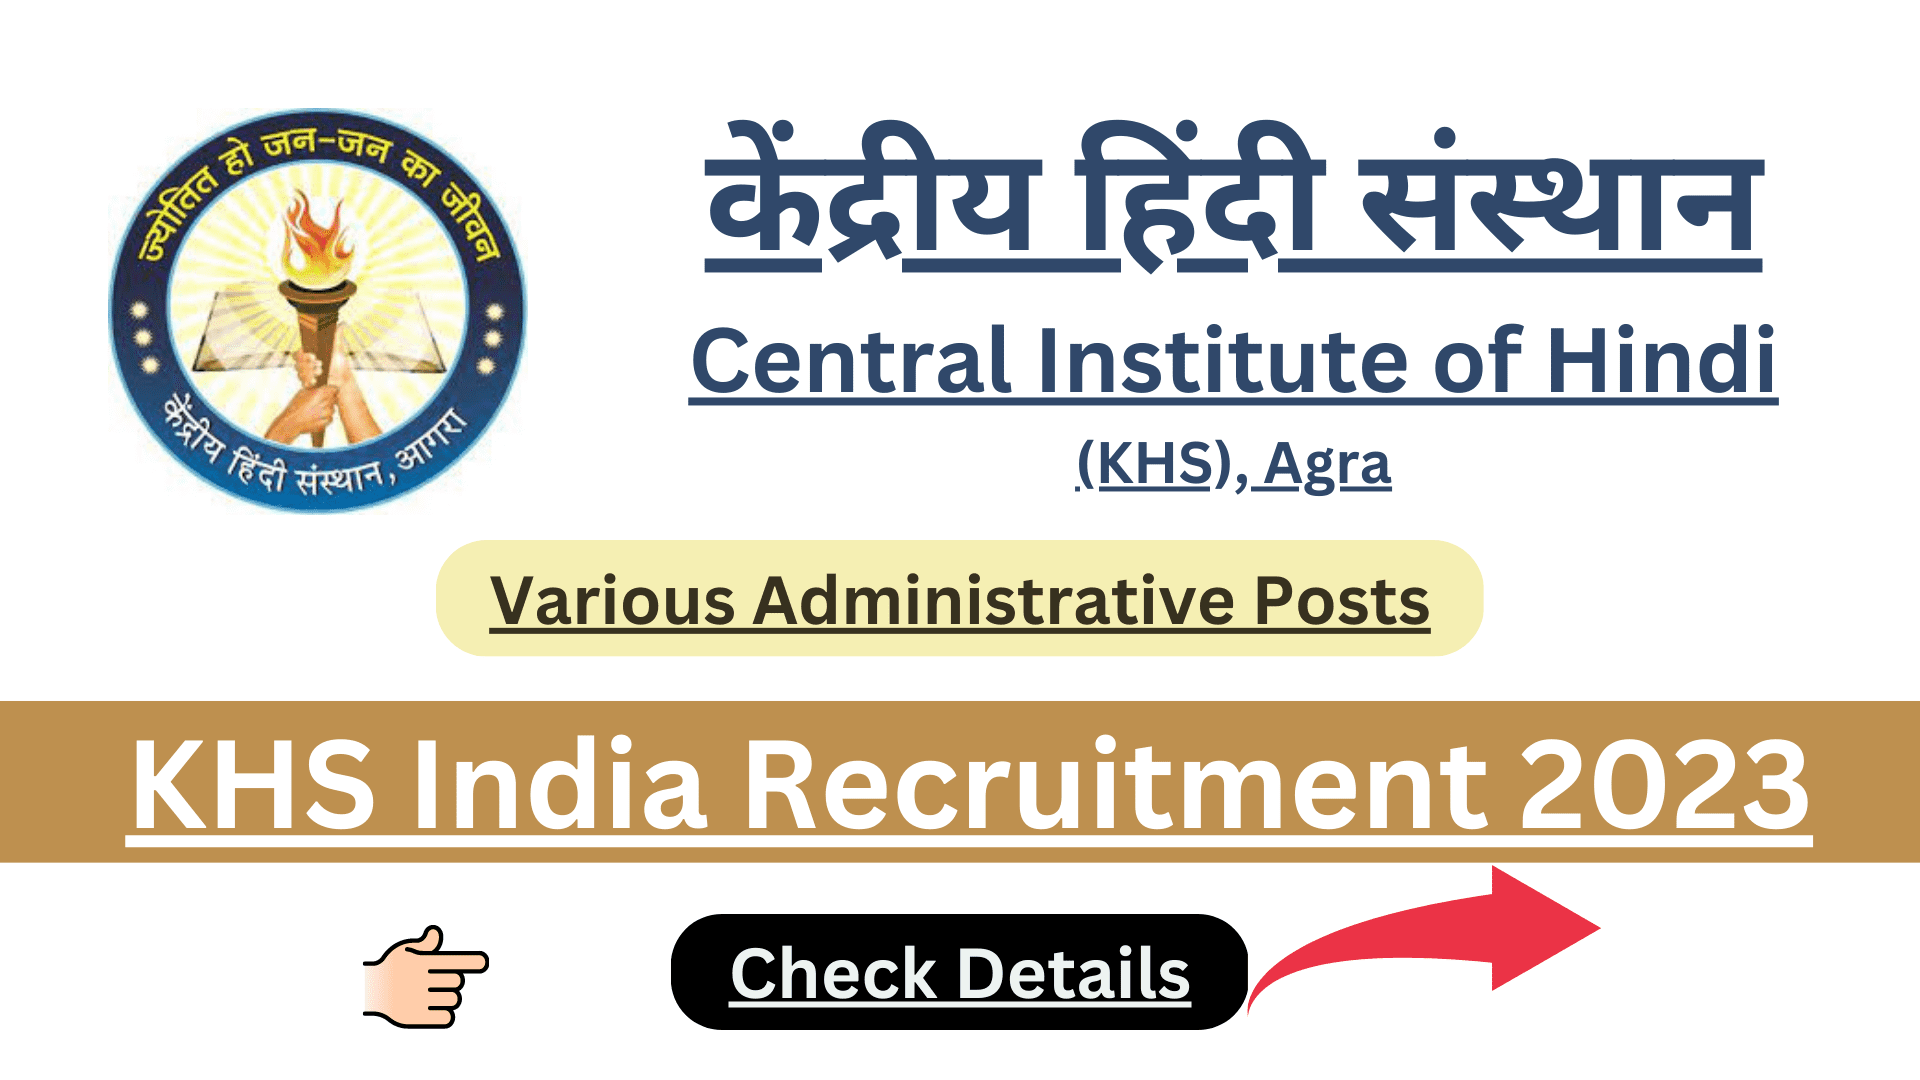 KHS India Recruitment 2023